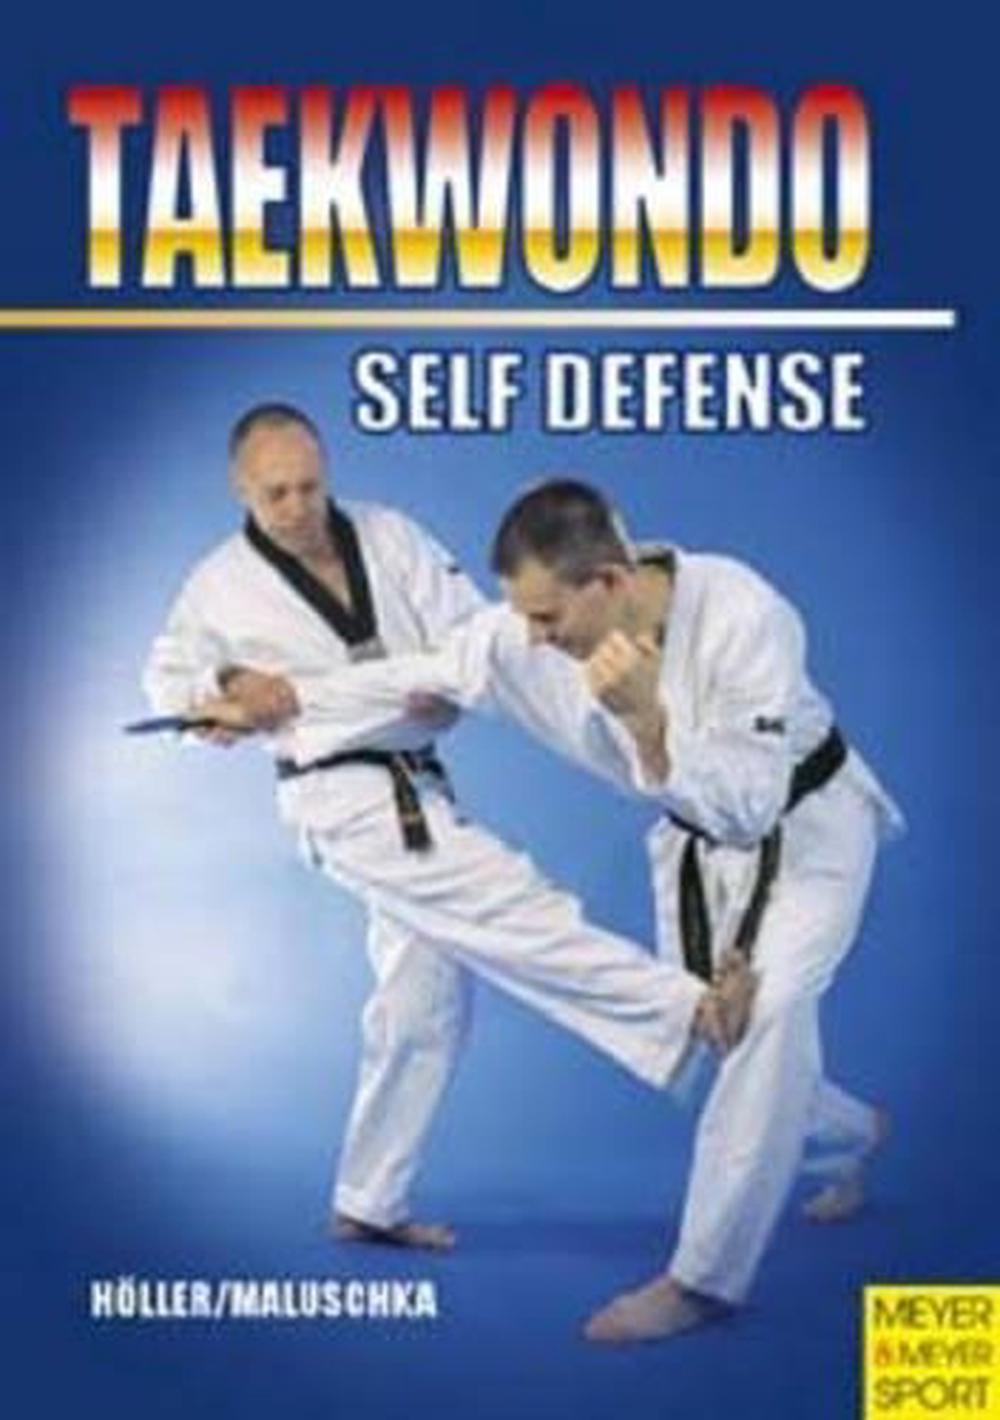 Taekwondo SelfDefense by Jurgen Holler (English